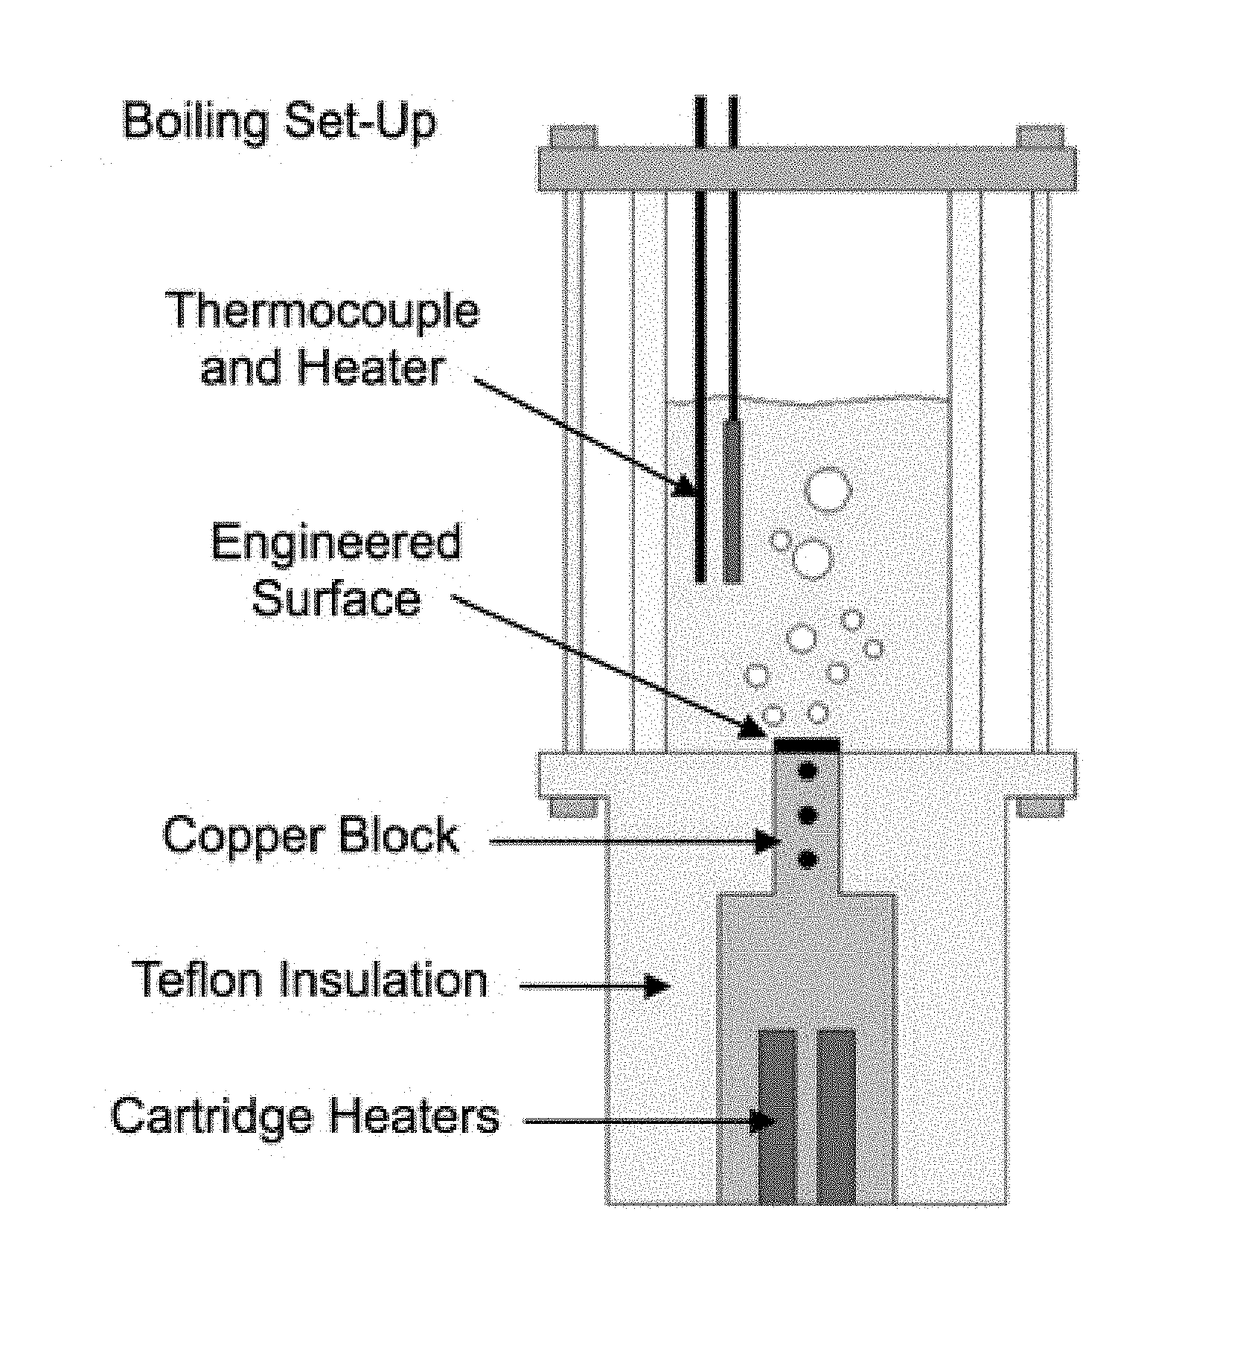 Increasing boiling heat transfer using low thermal conductivity materials